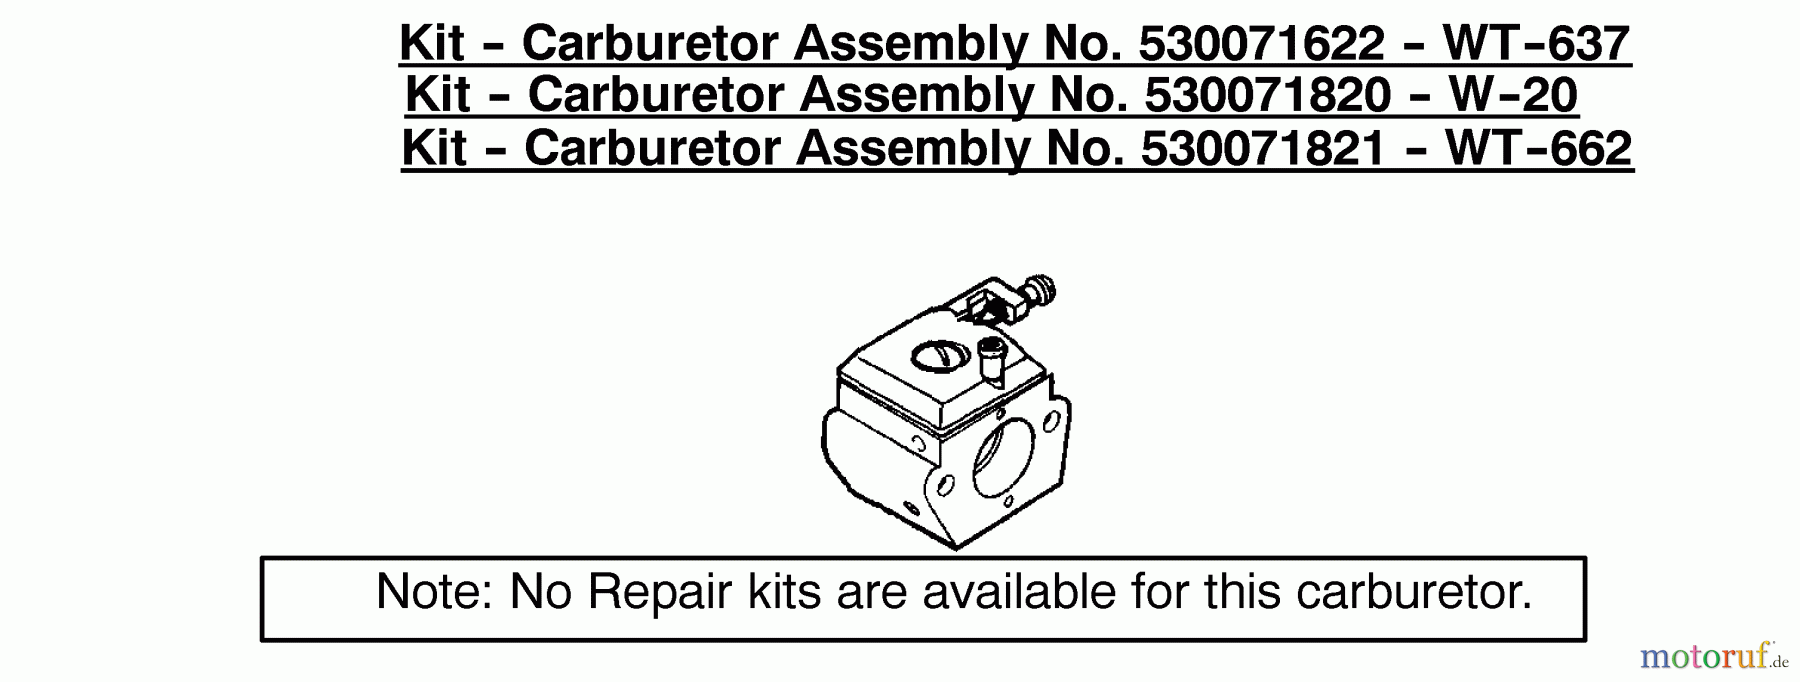  Poulan / Weed Eater Motorsägen 1950LE (Type 2) - Poulan Woodshark Chainsaw Kits - Carburetor Assembly 530071622/530071820/530071821